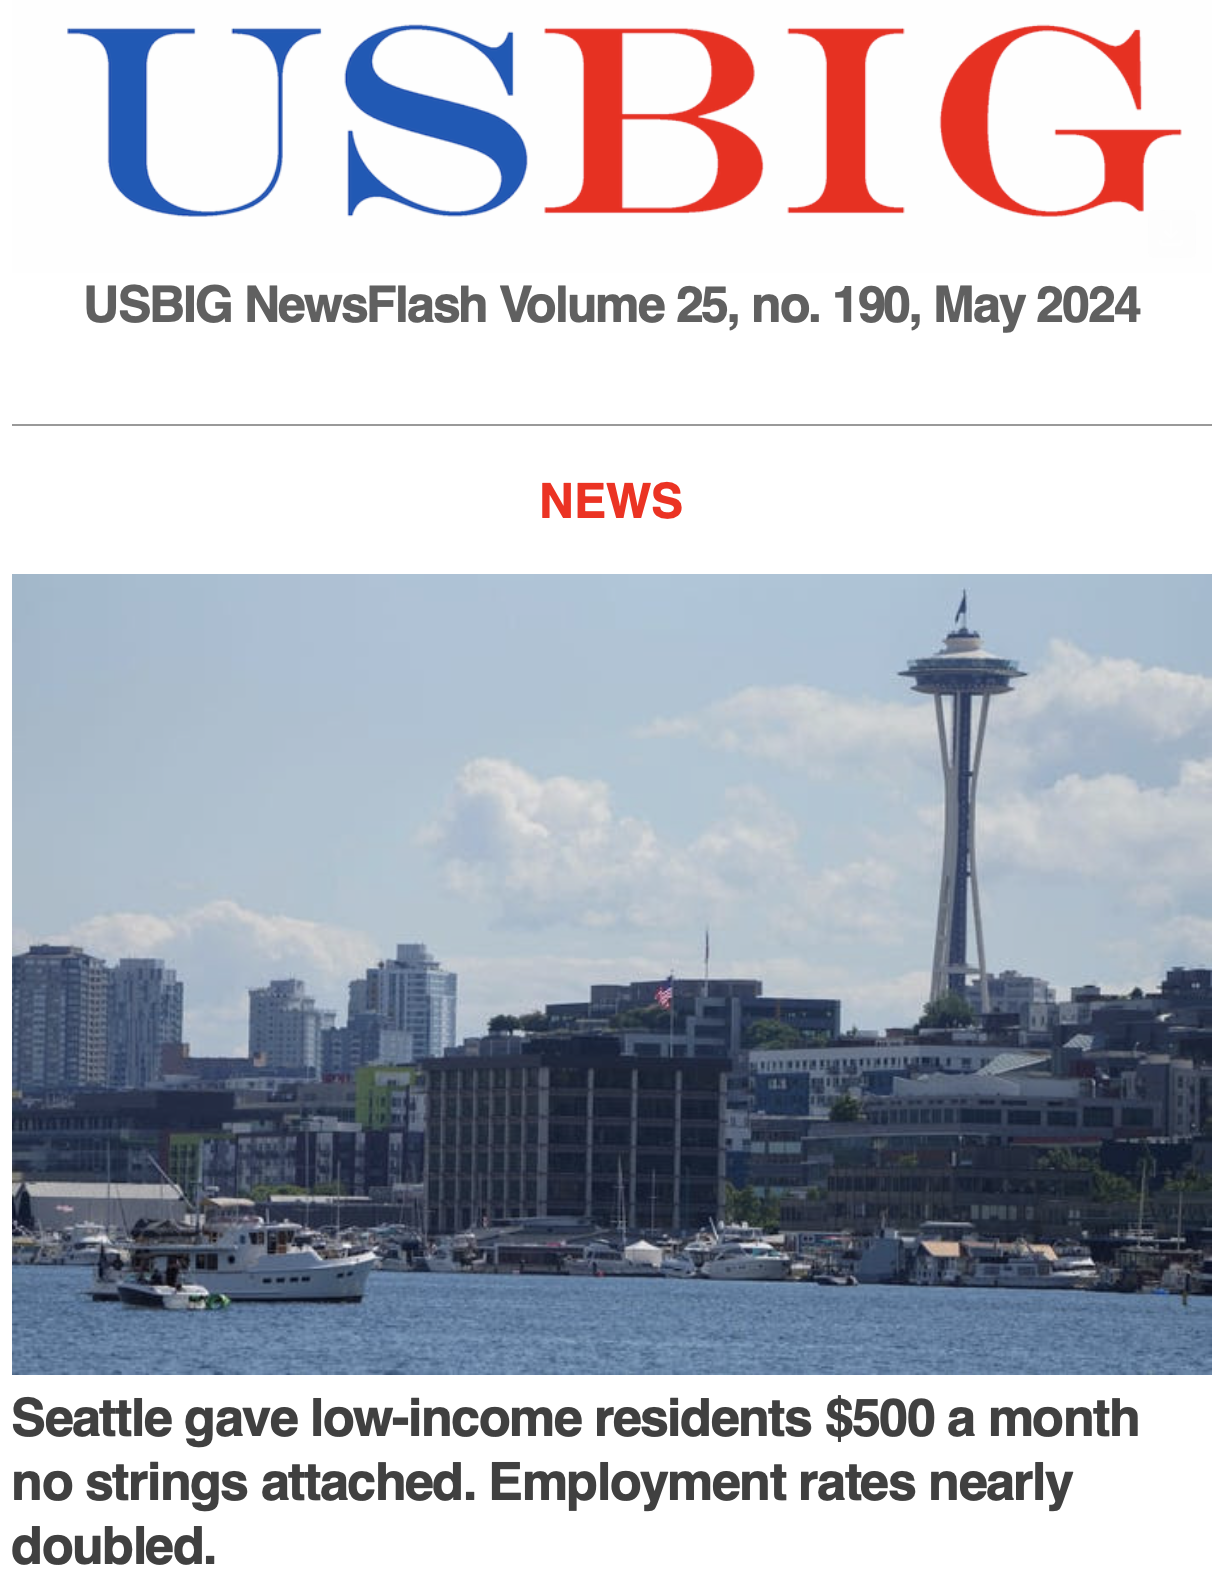 USBIG Newsflash, March 2024